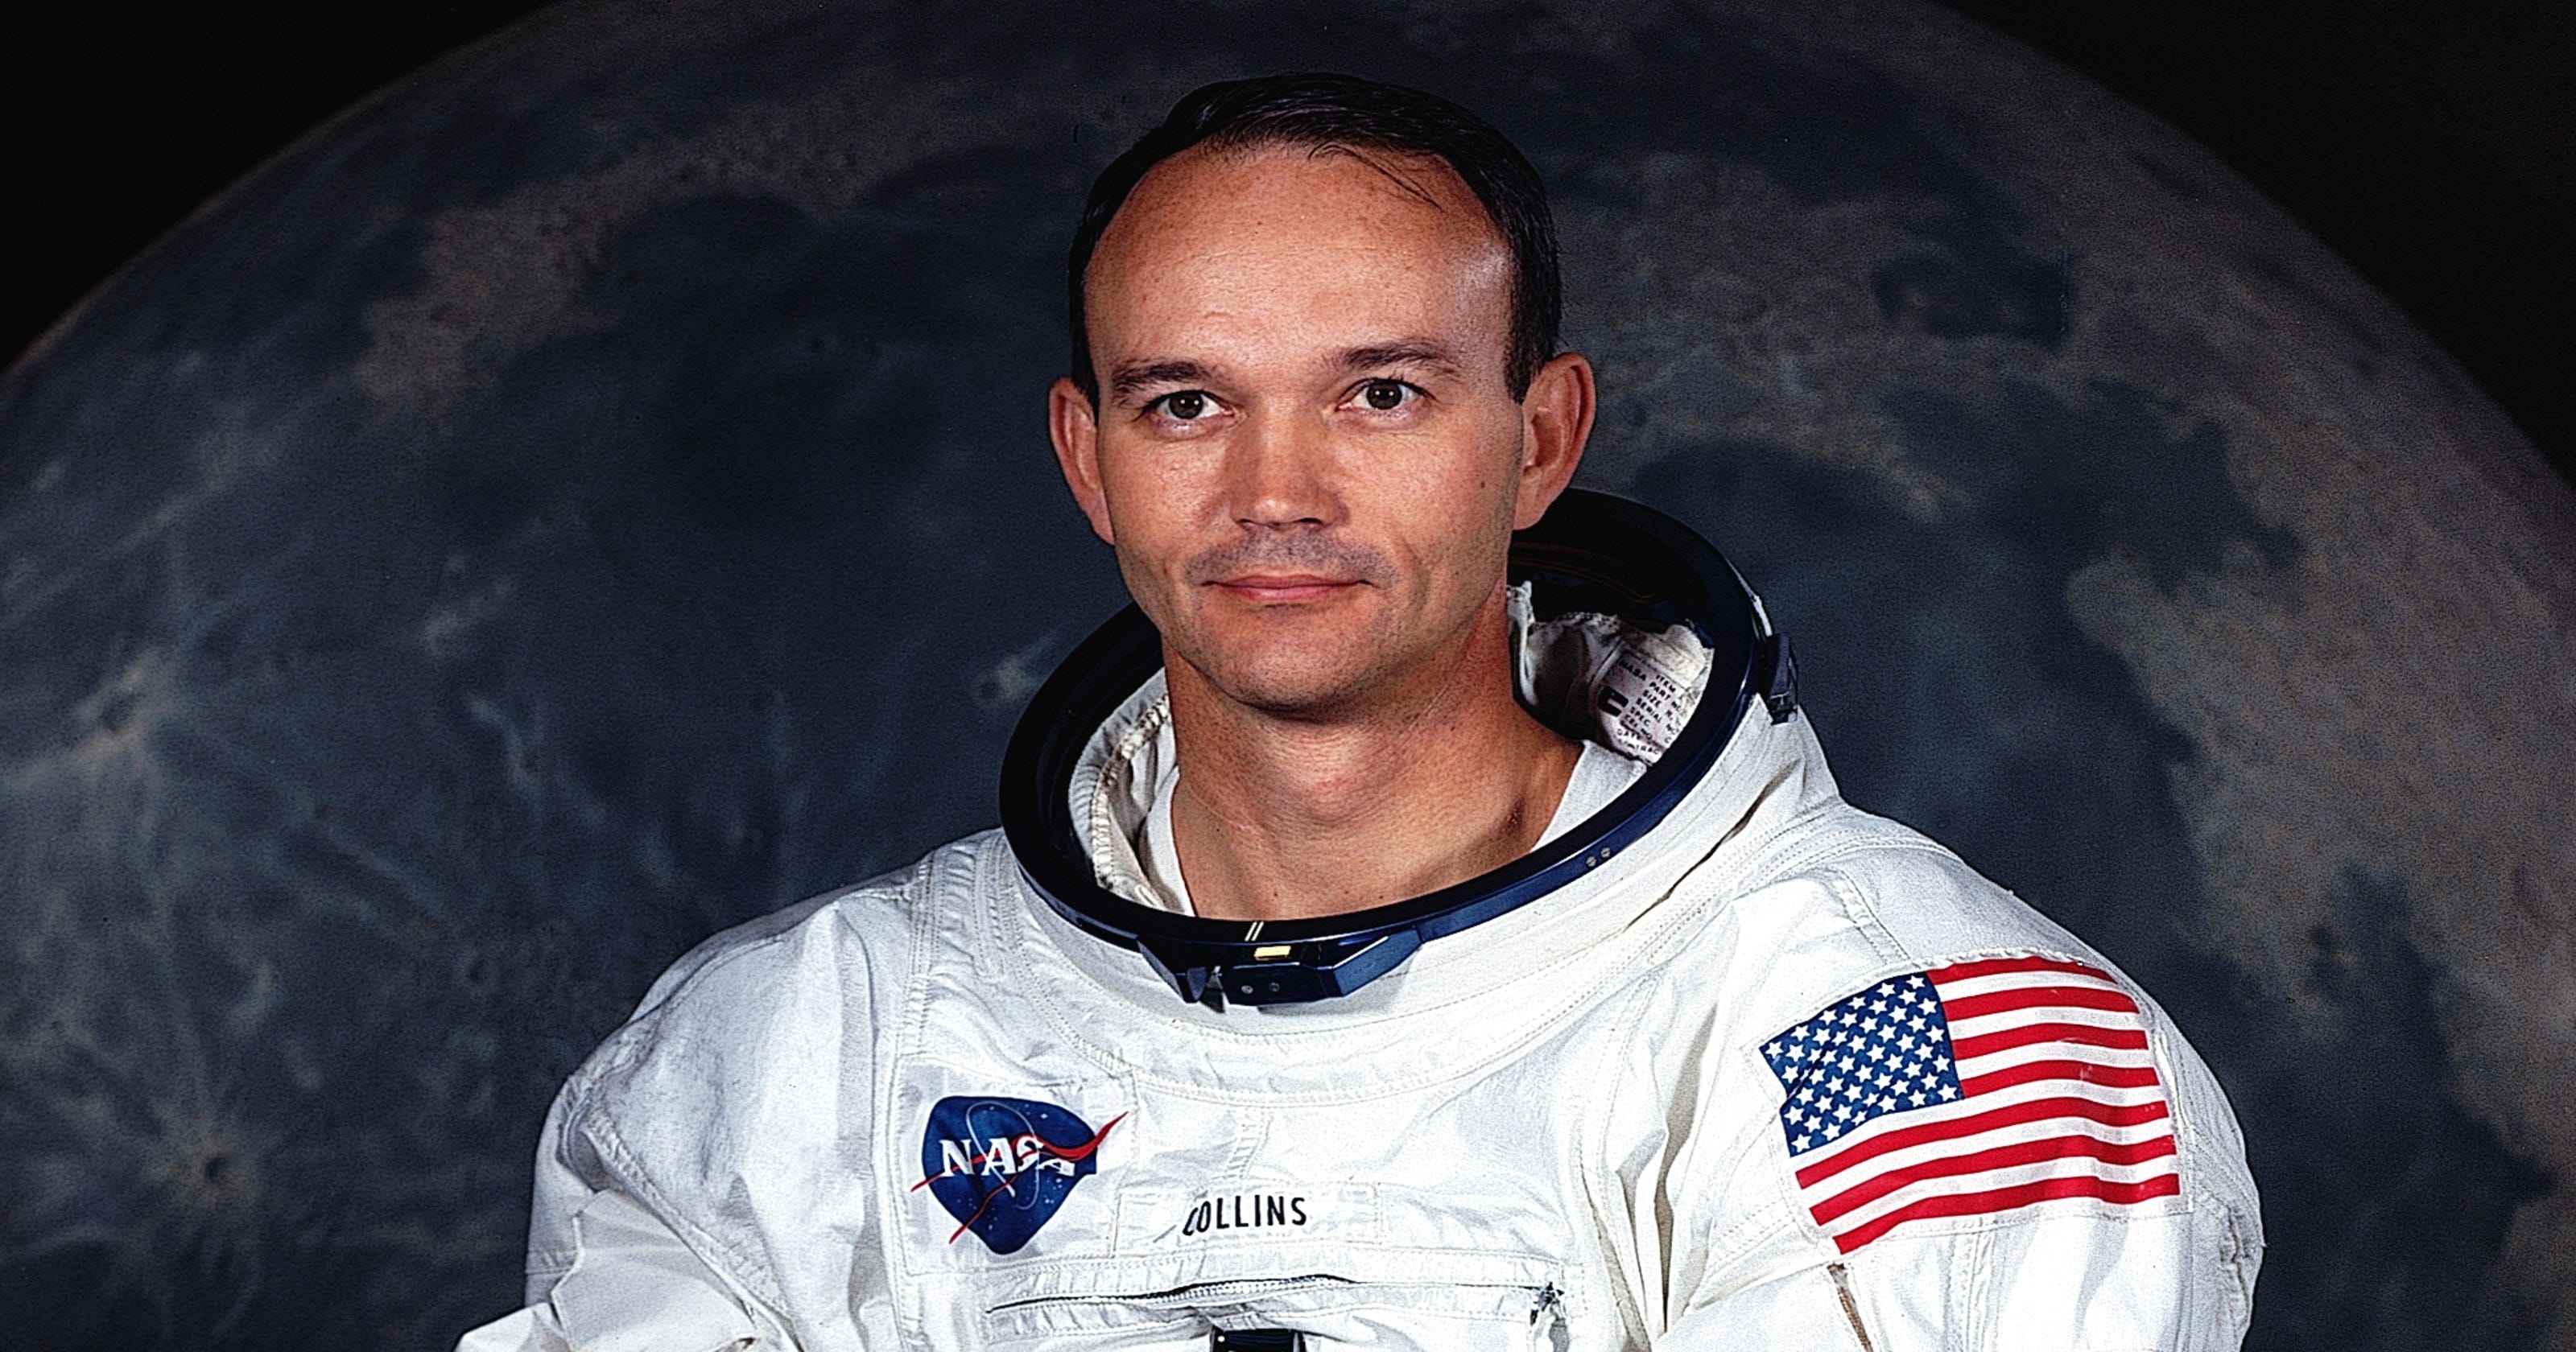 Michael Collins: The forgotten astronaut